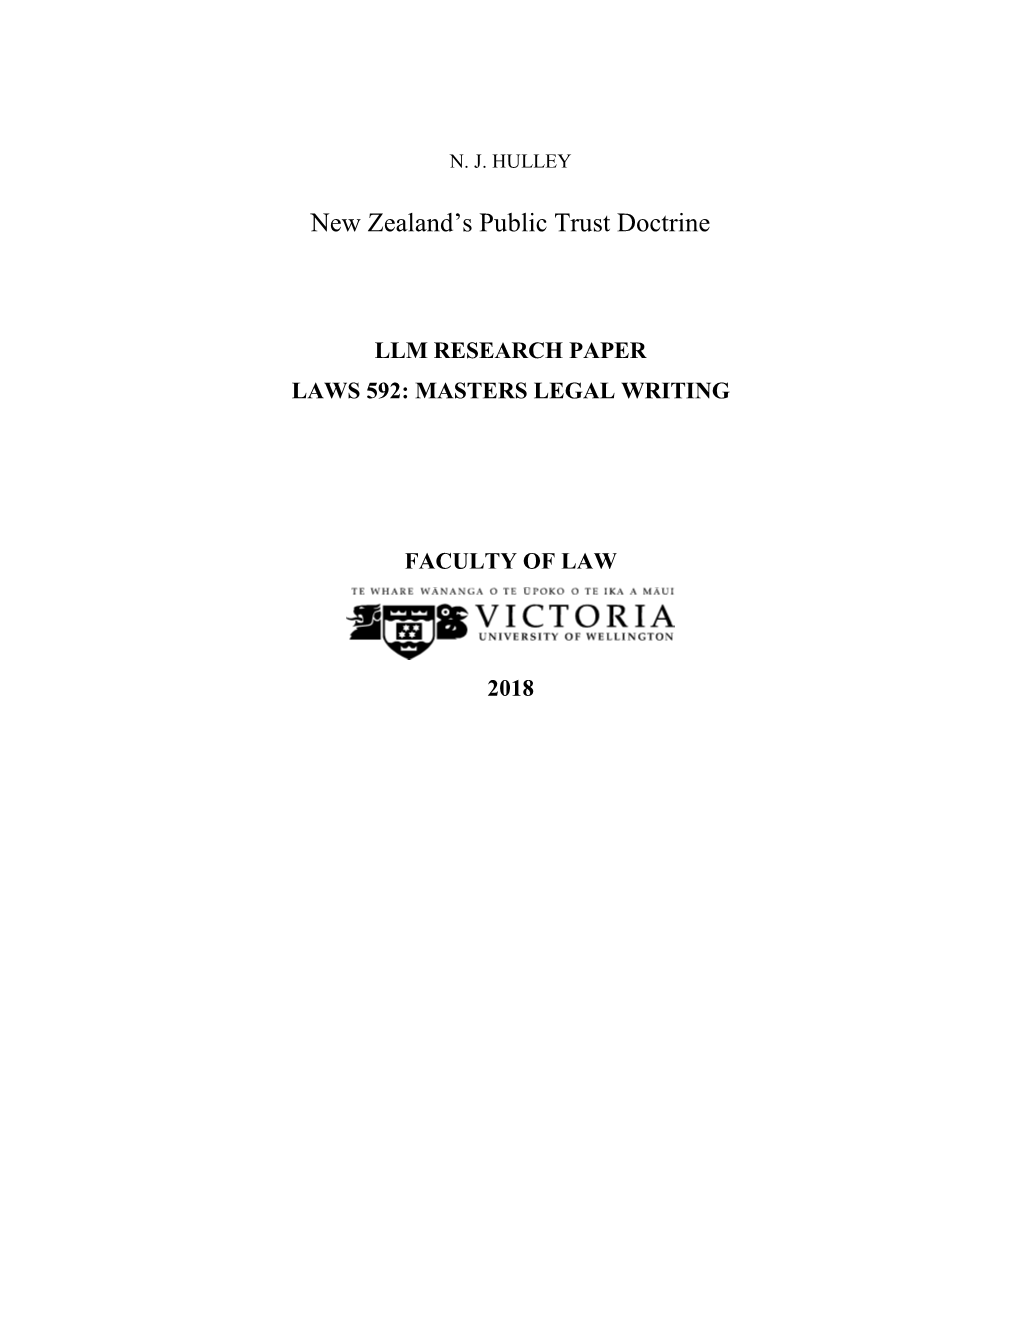 New Zealand's Public Trust Doctrine